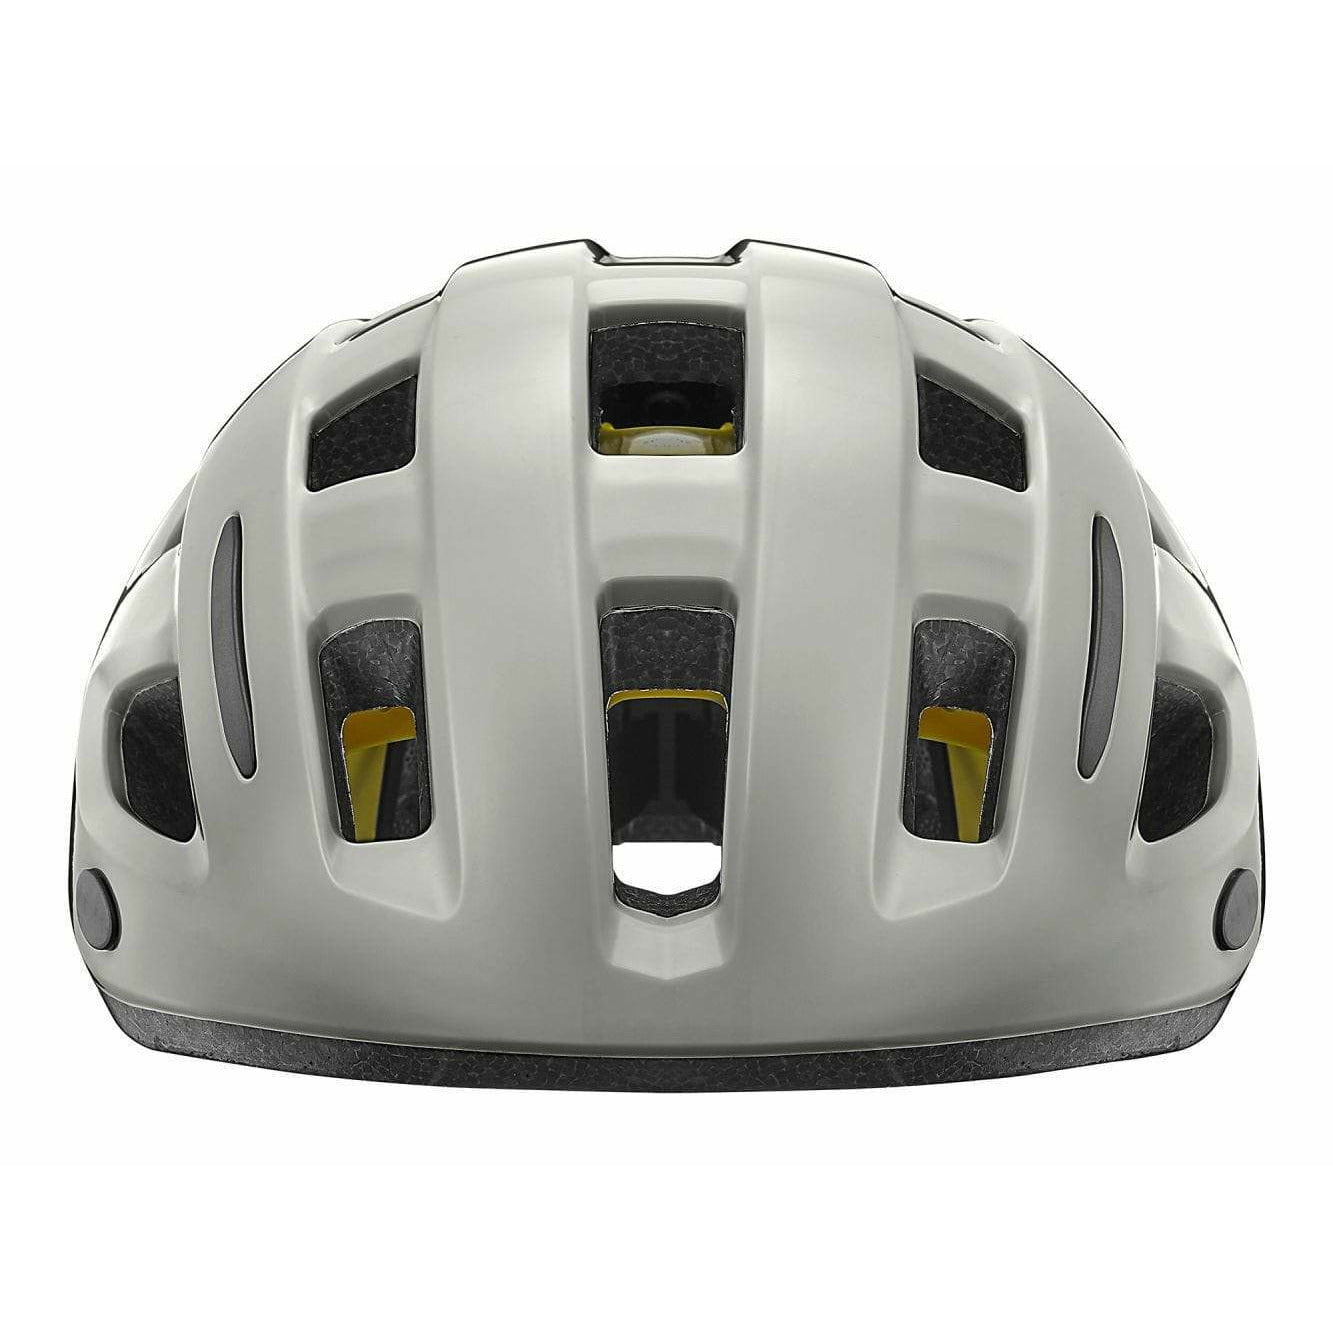 Liv Relay MIPS Women's Bike Helmet